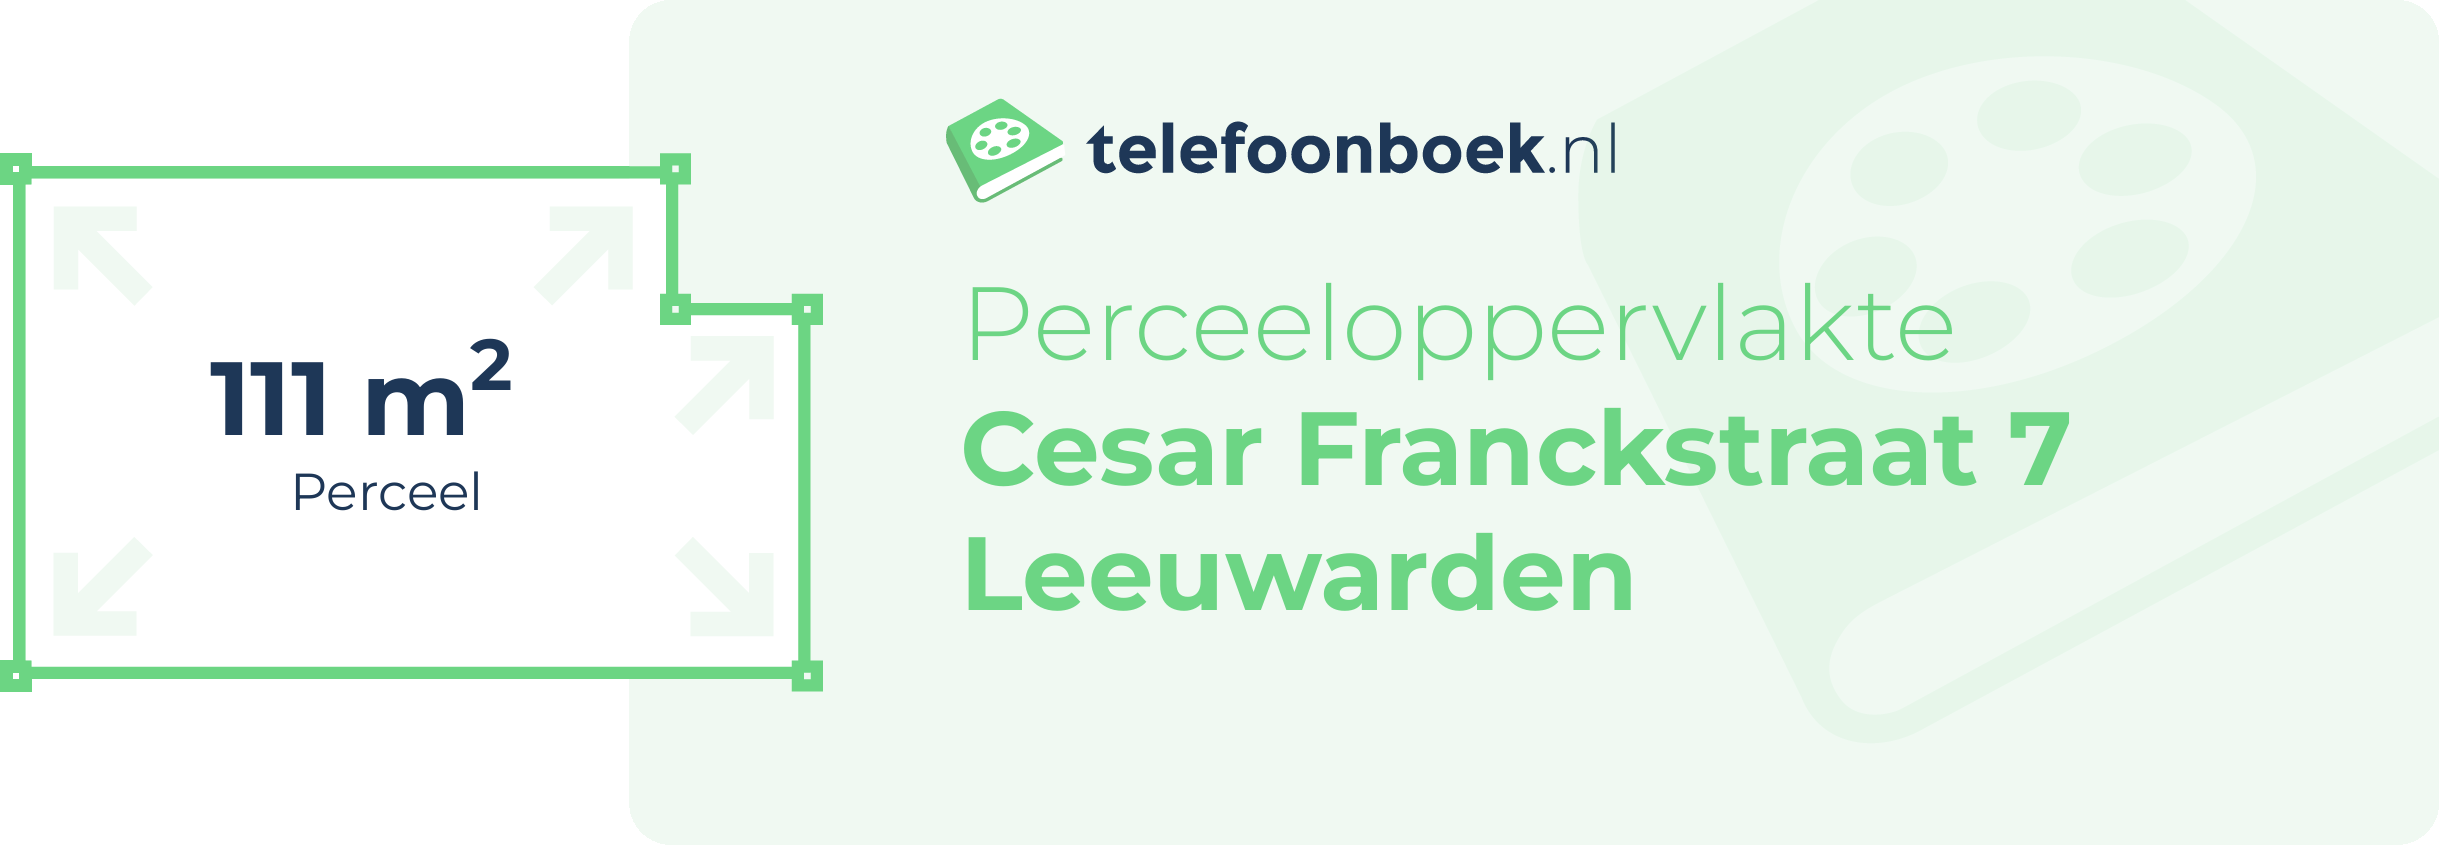 Perceeloppervlakte Cesar Franckstraat 7 Leeuwarden